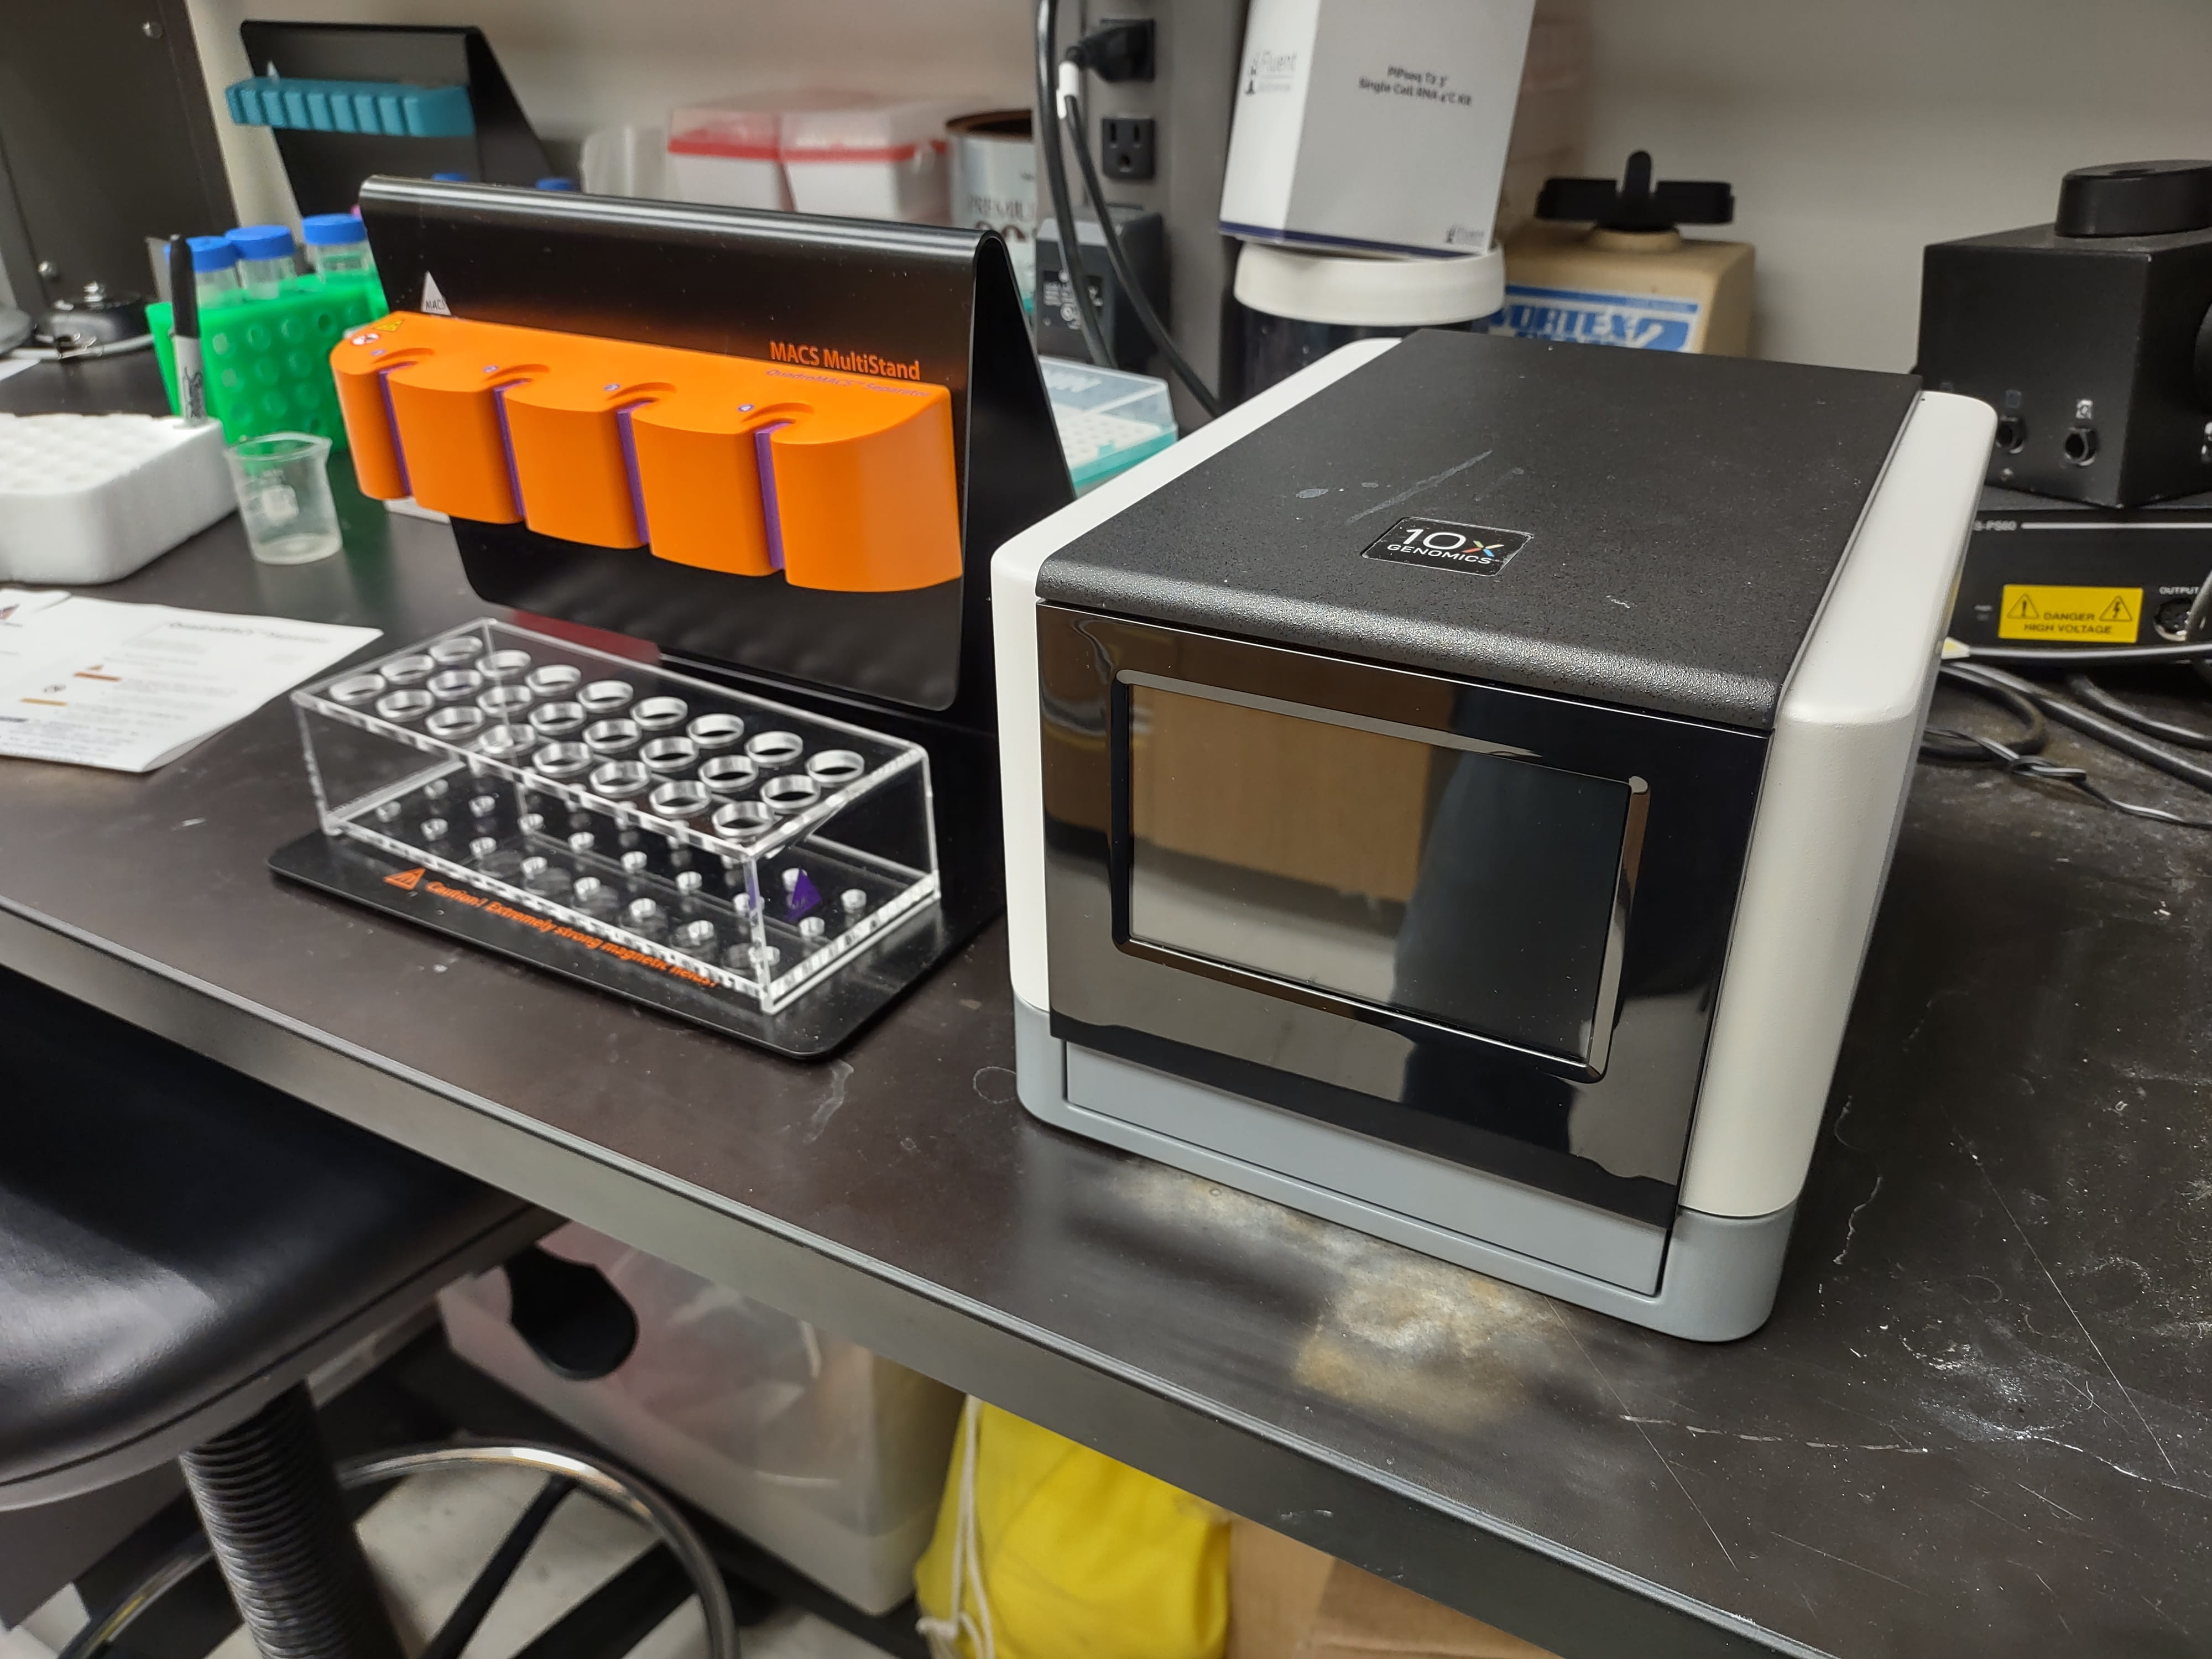 Single cell lab equipment